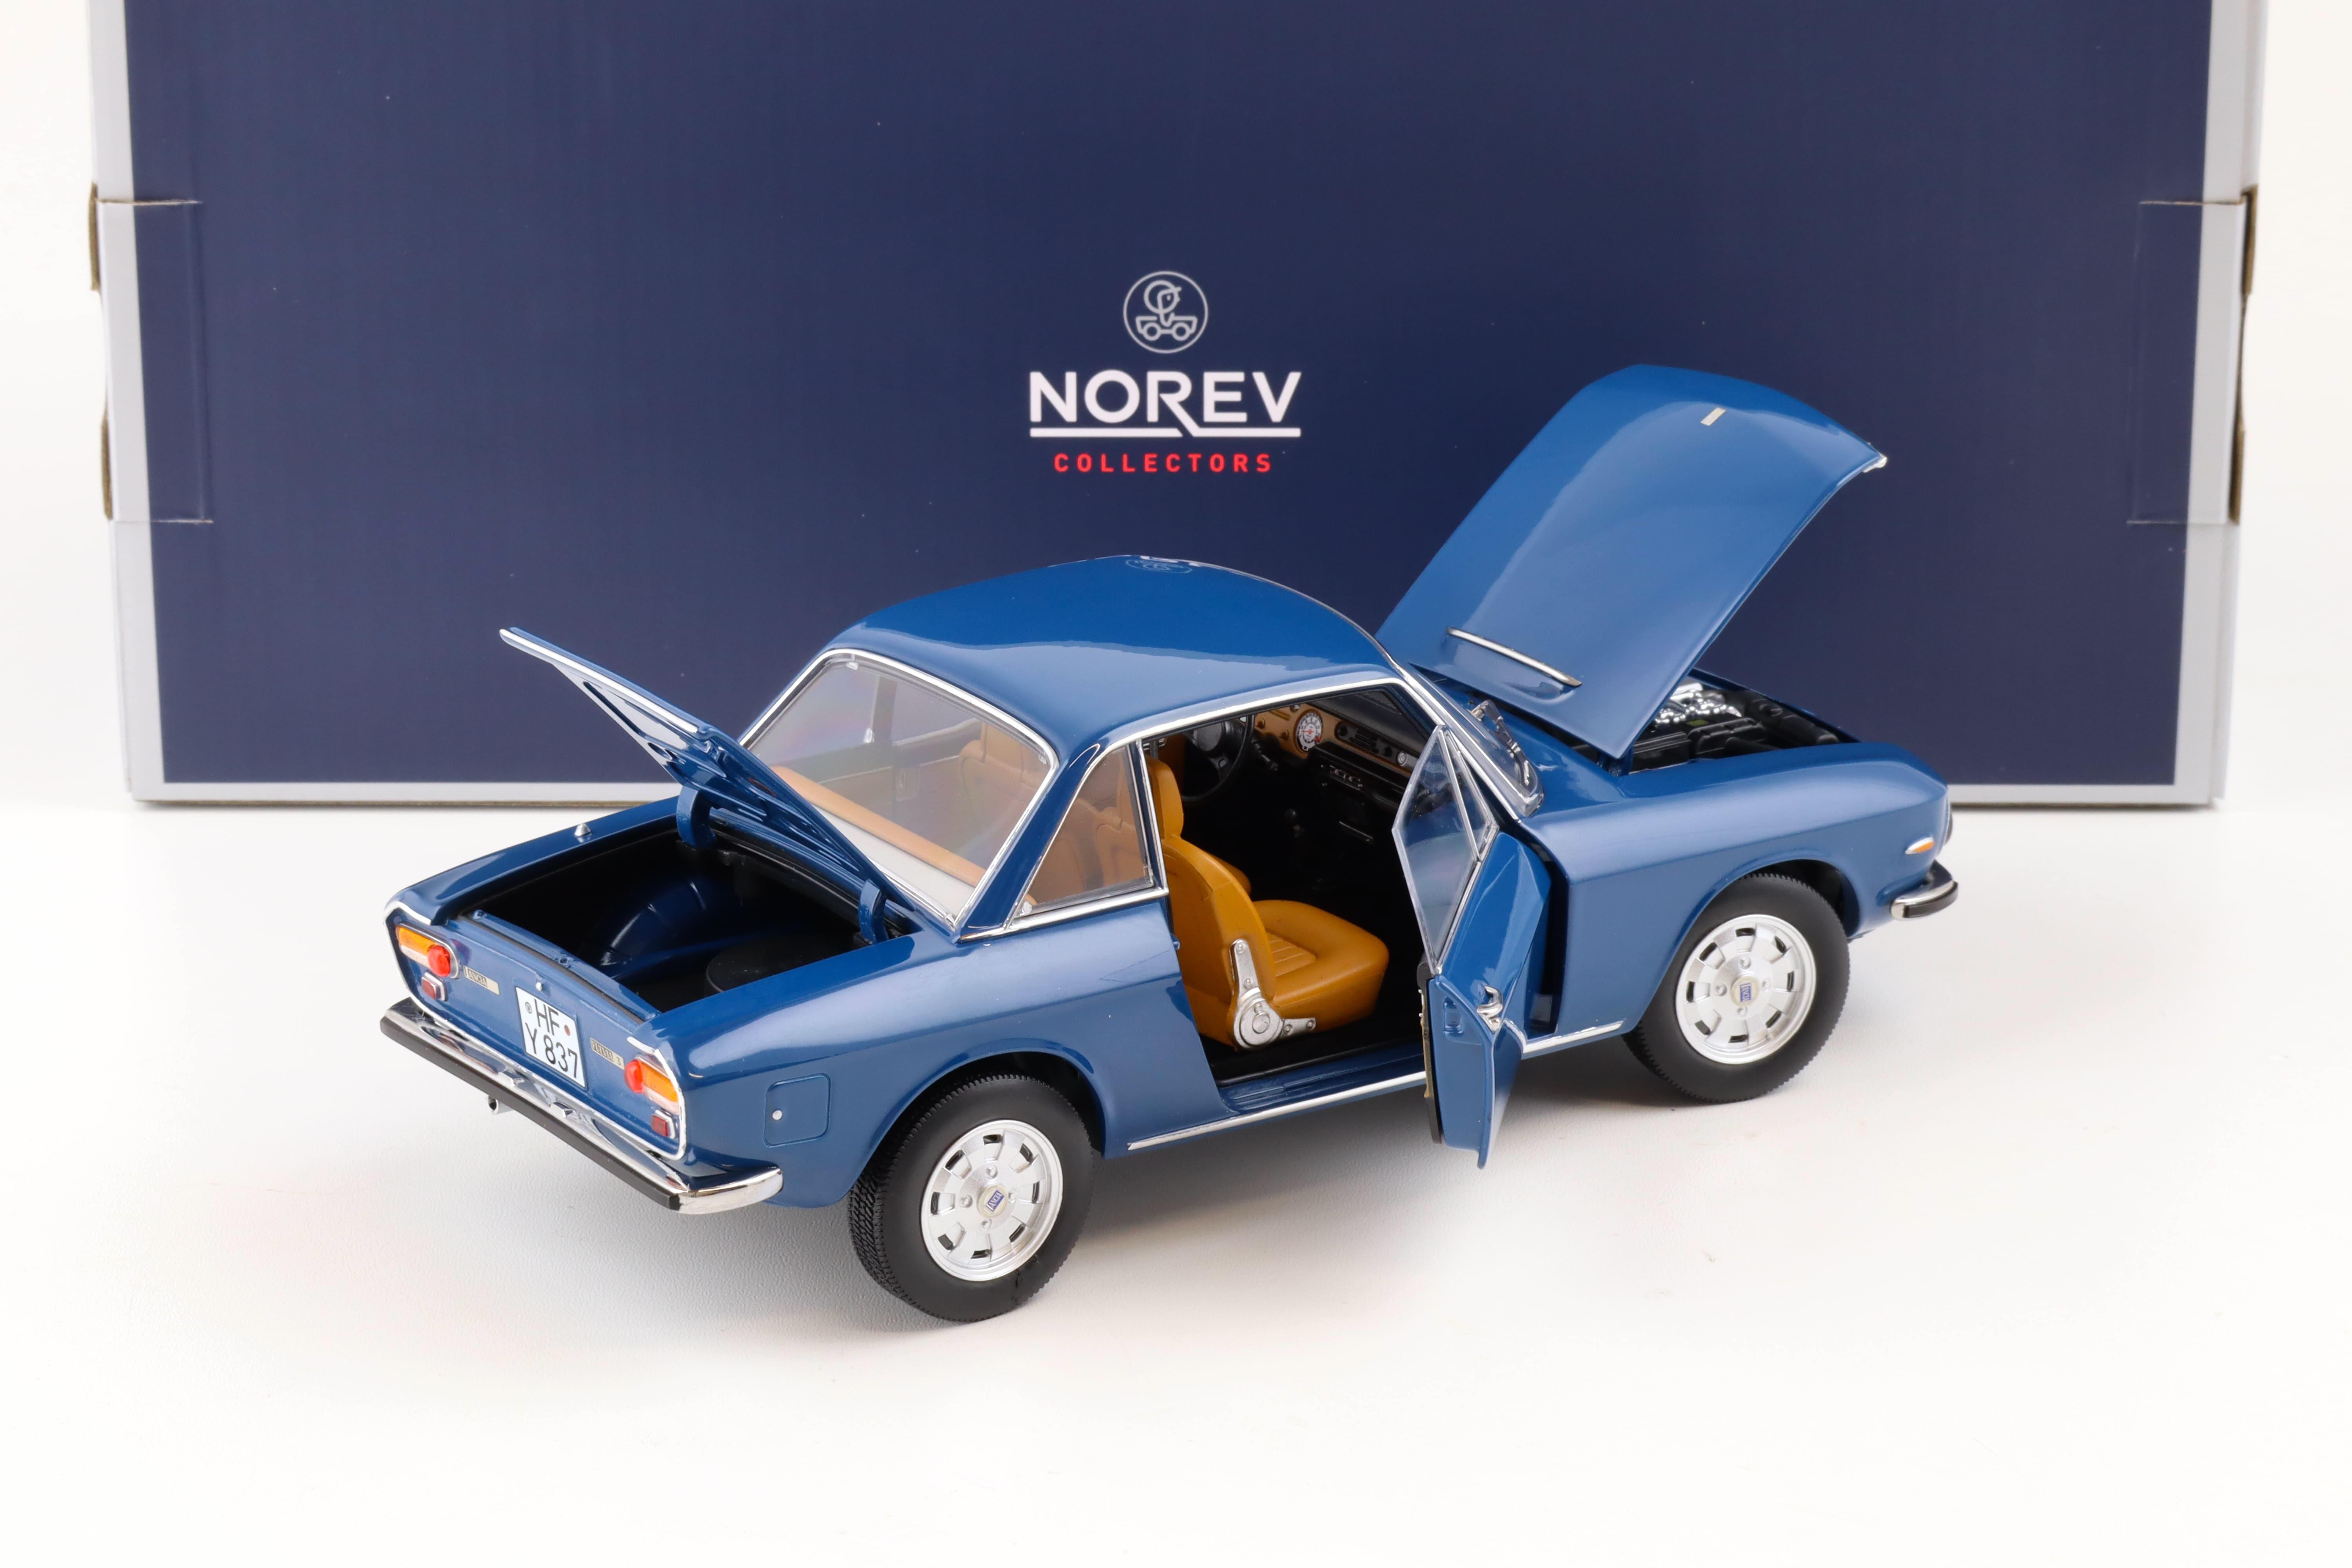 1:18 Norev Lancia Fulvia 3 blue agnano 1975 - Limited Edition 1000 pcs.